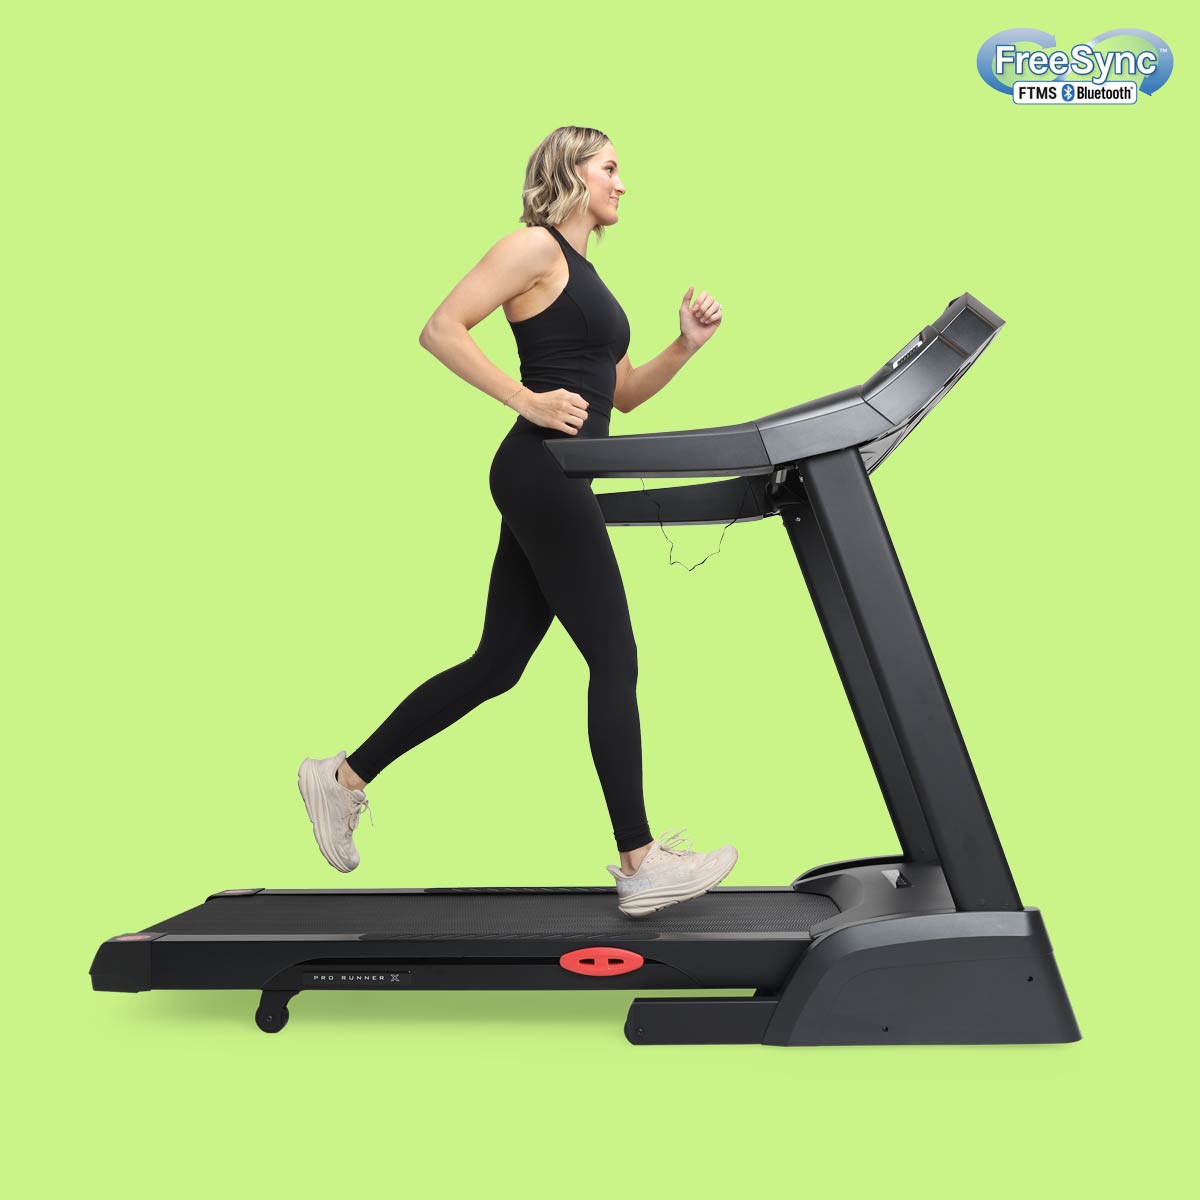 3G Cardio Pro Runner Treadmill with FreeSync™ FTMS Bluetooth® - Pro Runner X Treadmill